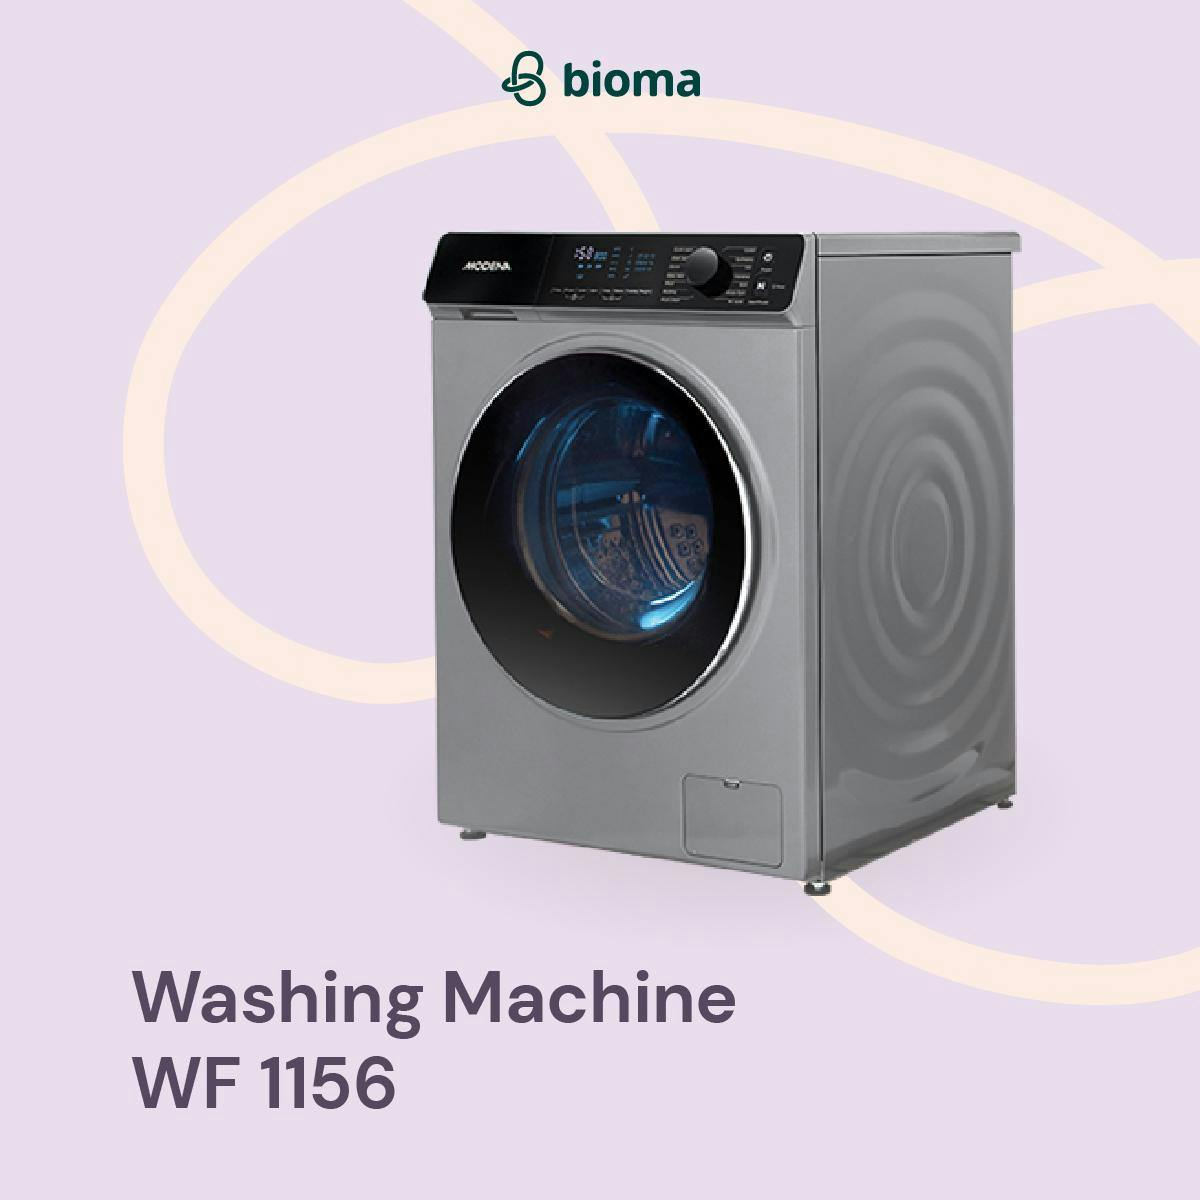 Image 333 Washing Machine WF 1156